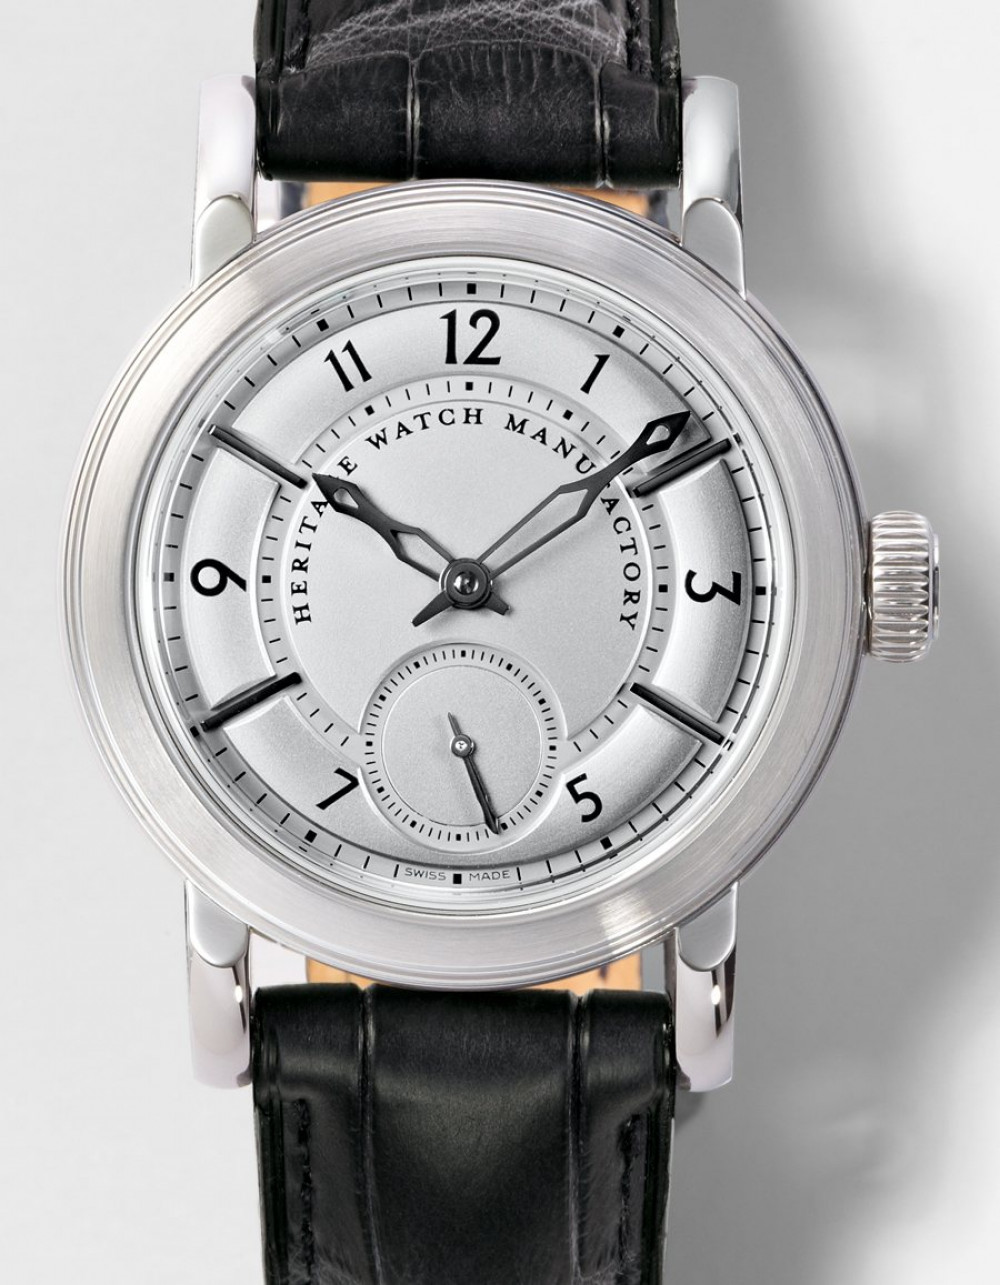 Zegarek firmy Heritage Watch Manufactory, model Magnus Contemporaine